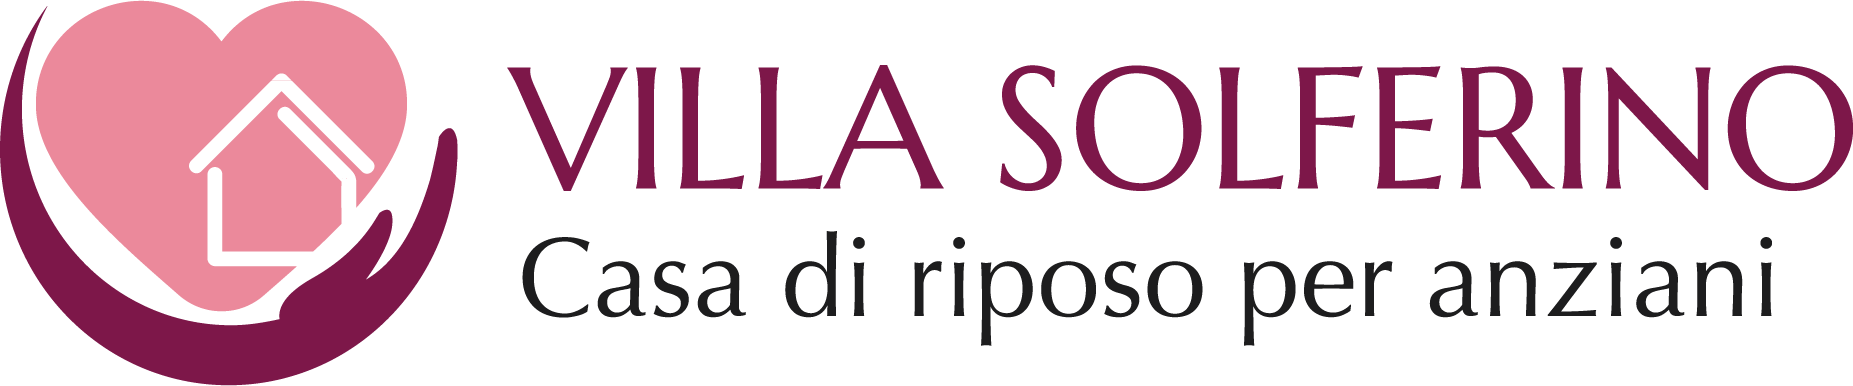 Villa Solferino